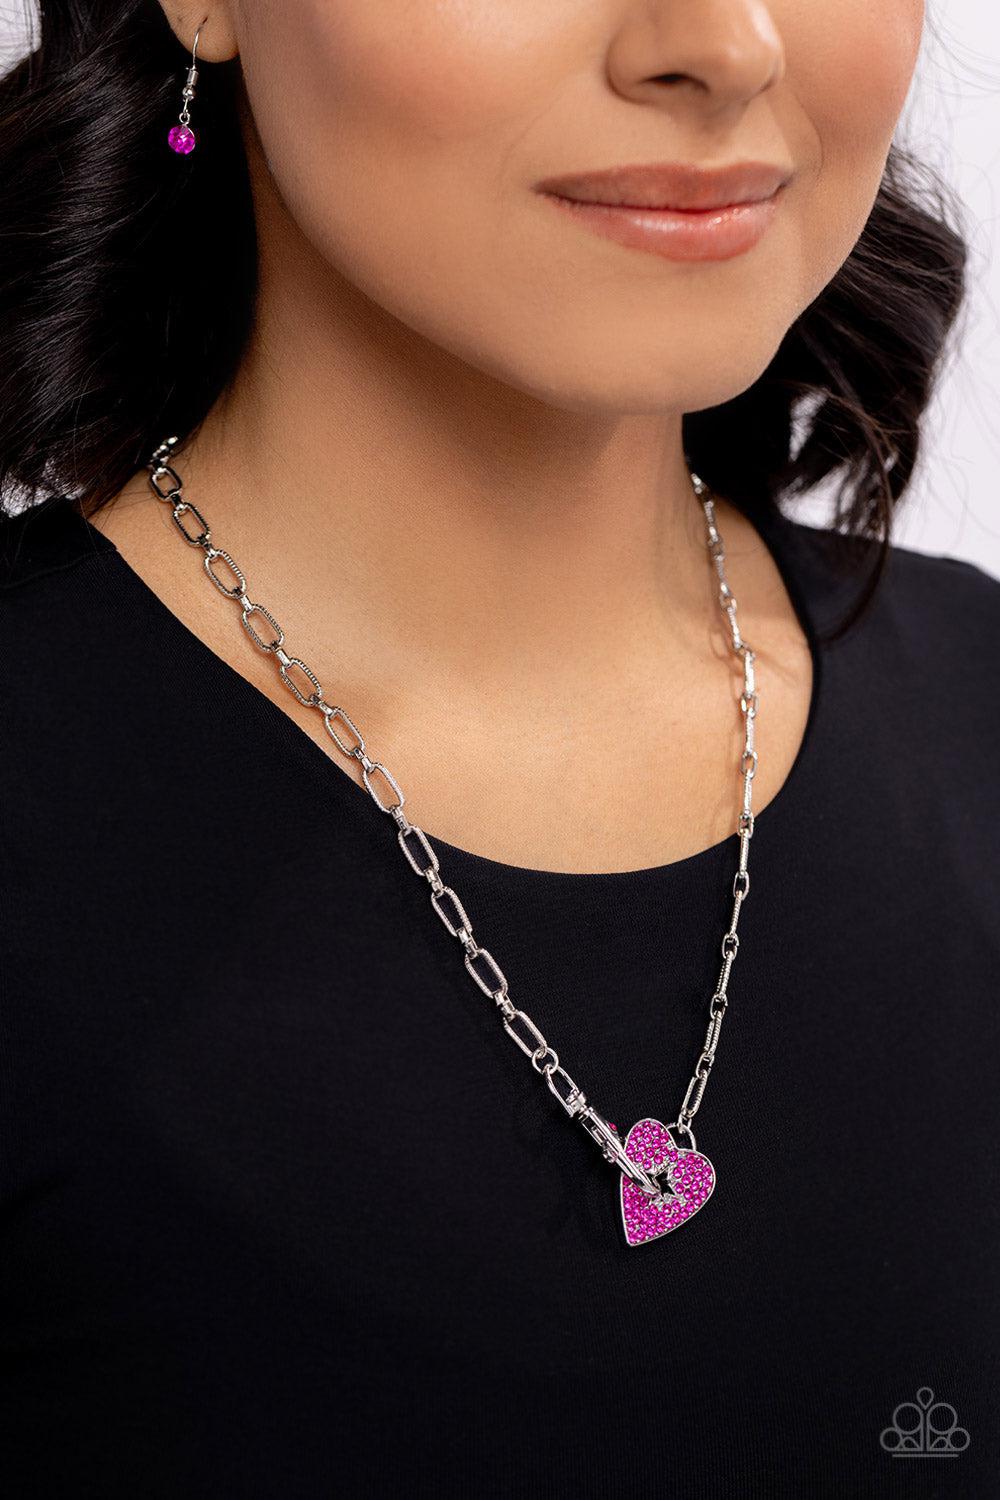 Radical Romance Pink Rhinestone Heart Necklace - Paparazzi Accessories- lightbox - CarasShop.com - $5 Jewelry by Cara Jewels